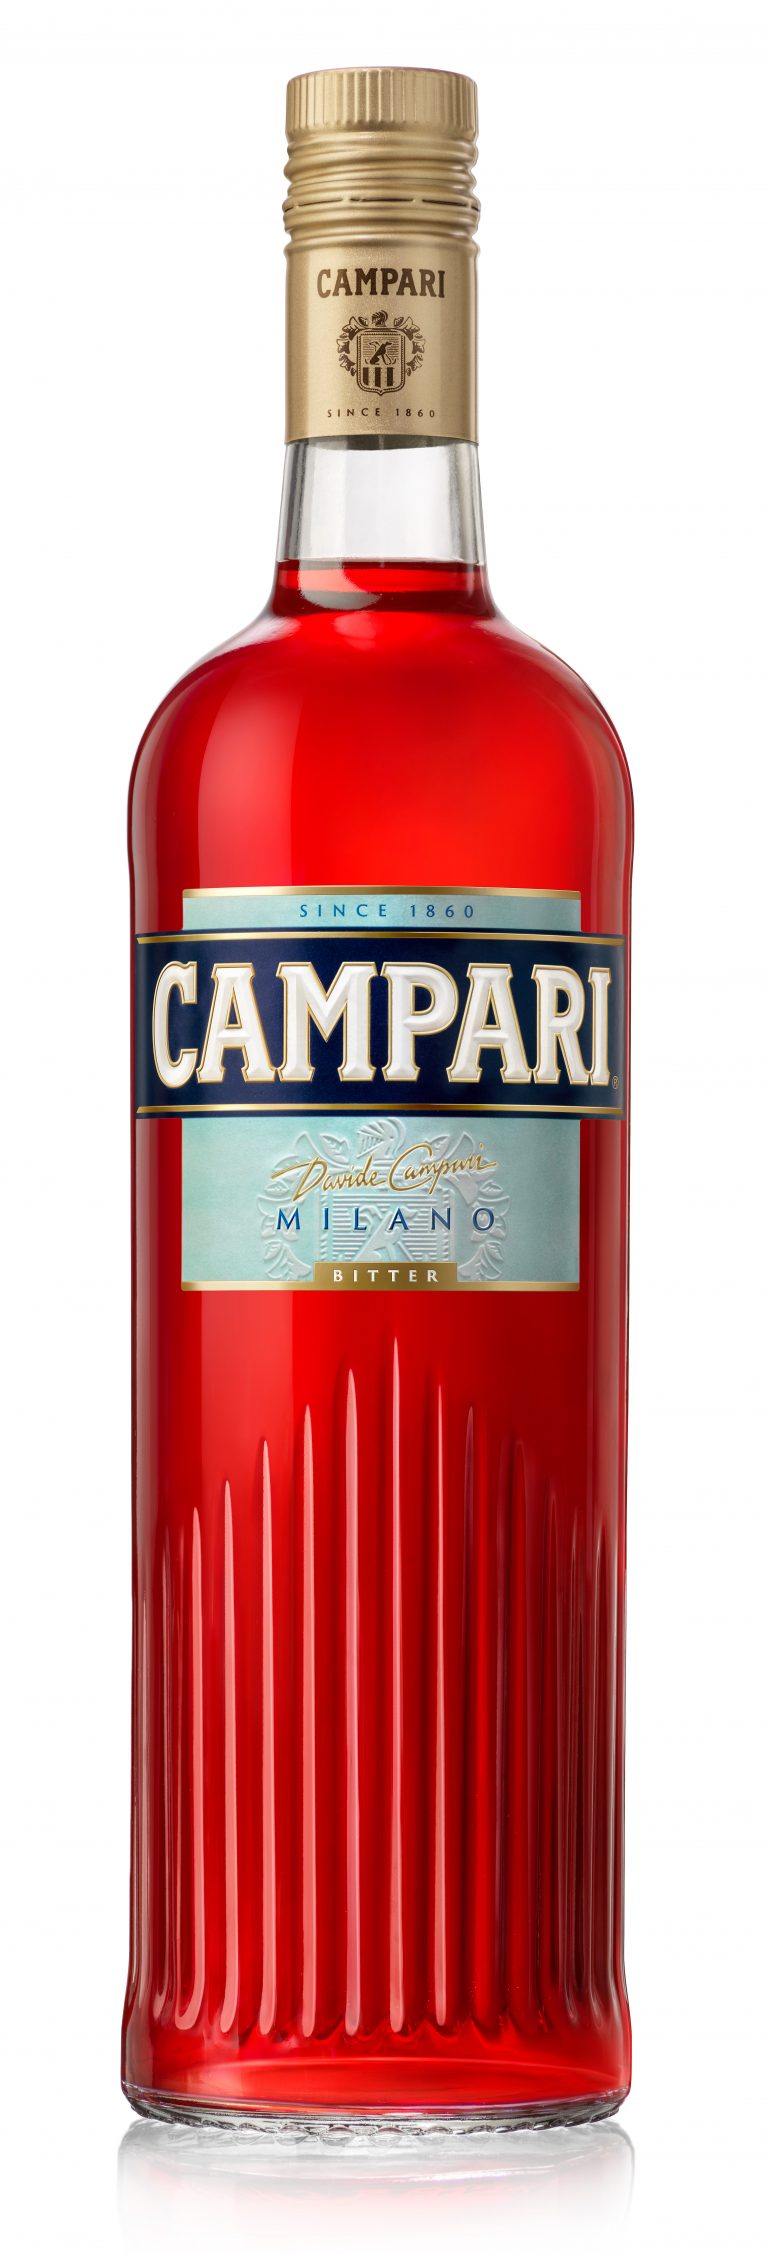 CAMPARI launches iconic new bottle